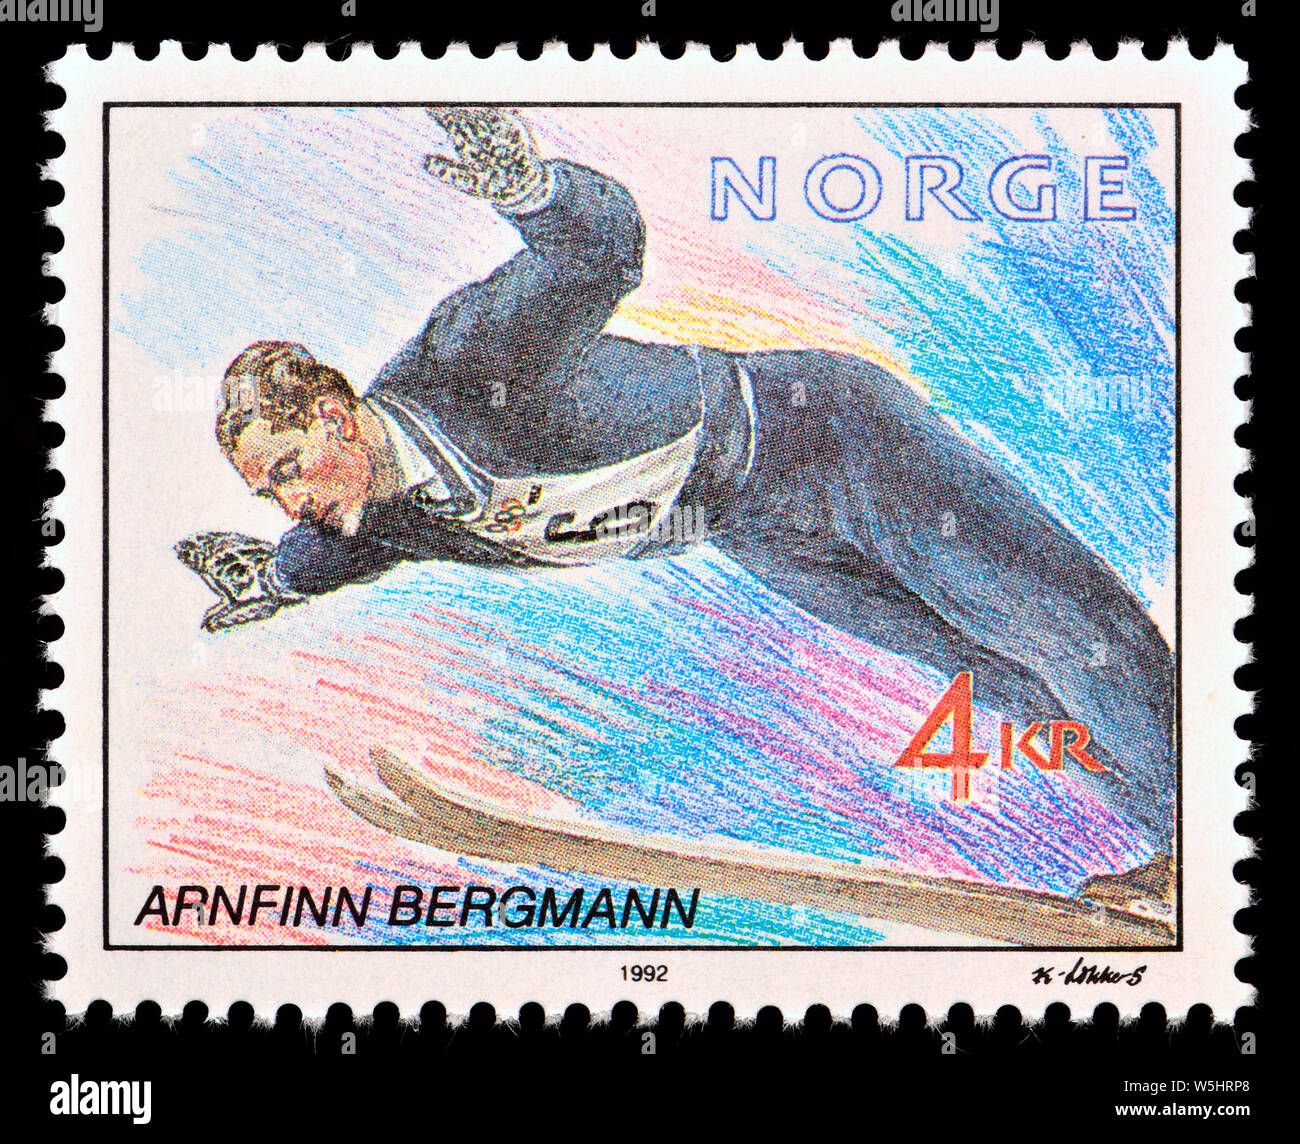 Sellos de Noruega (1992): Arnfinn Bergmann (1928 - 2011) puente de esquí noruego Foto de stock